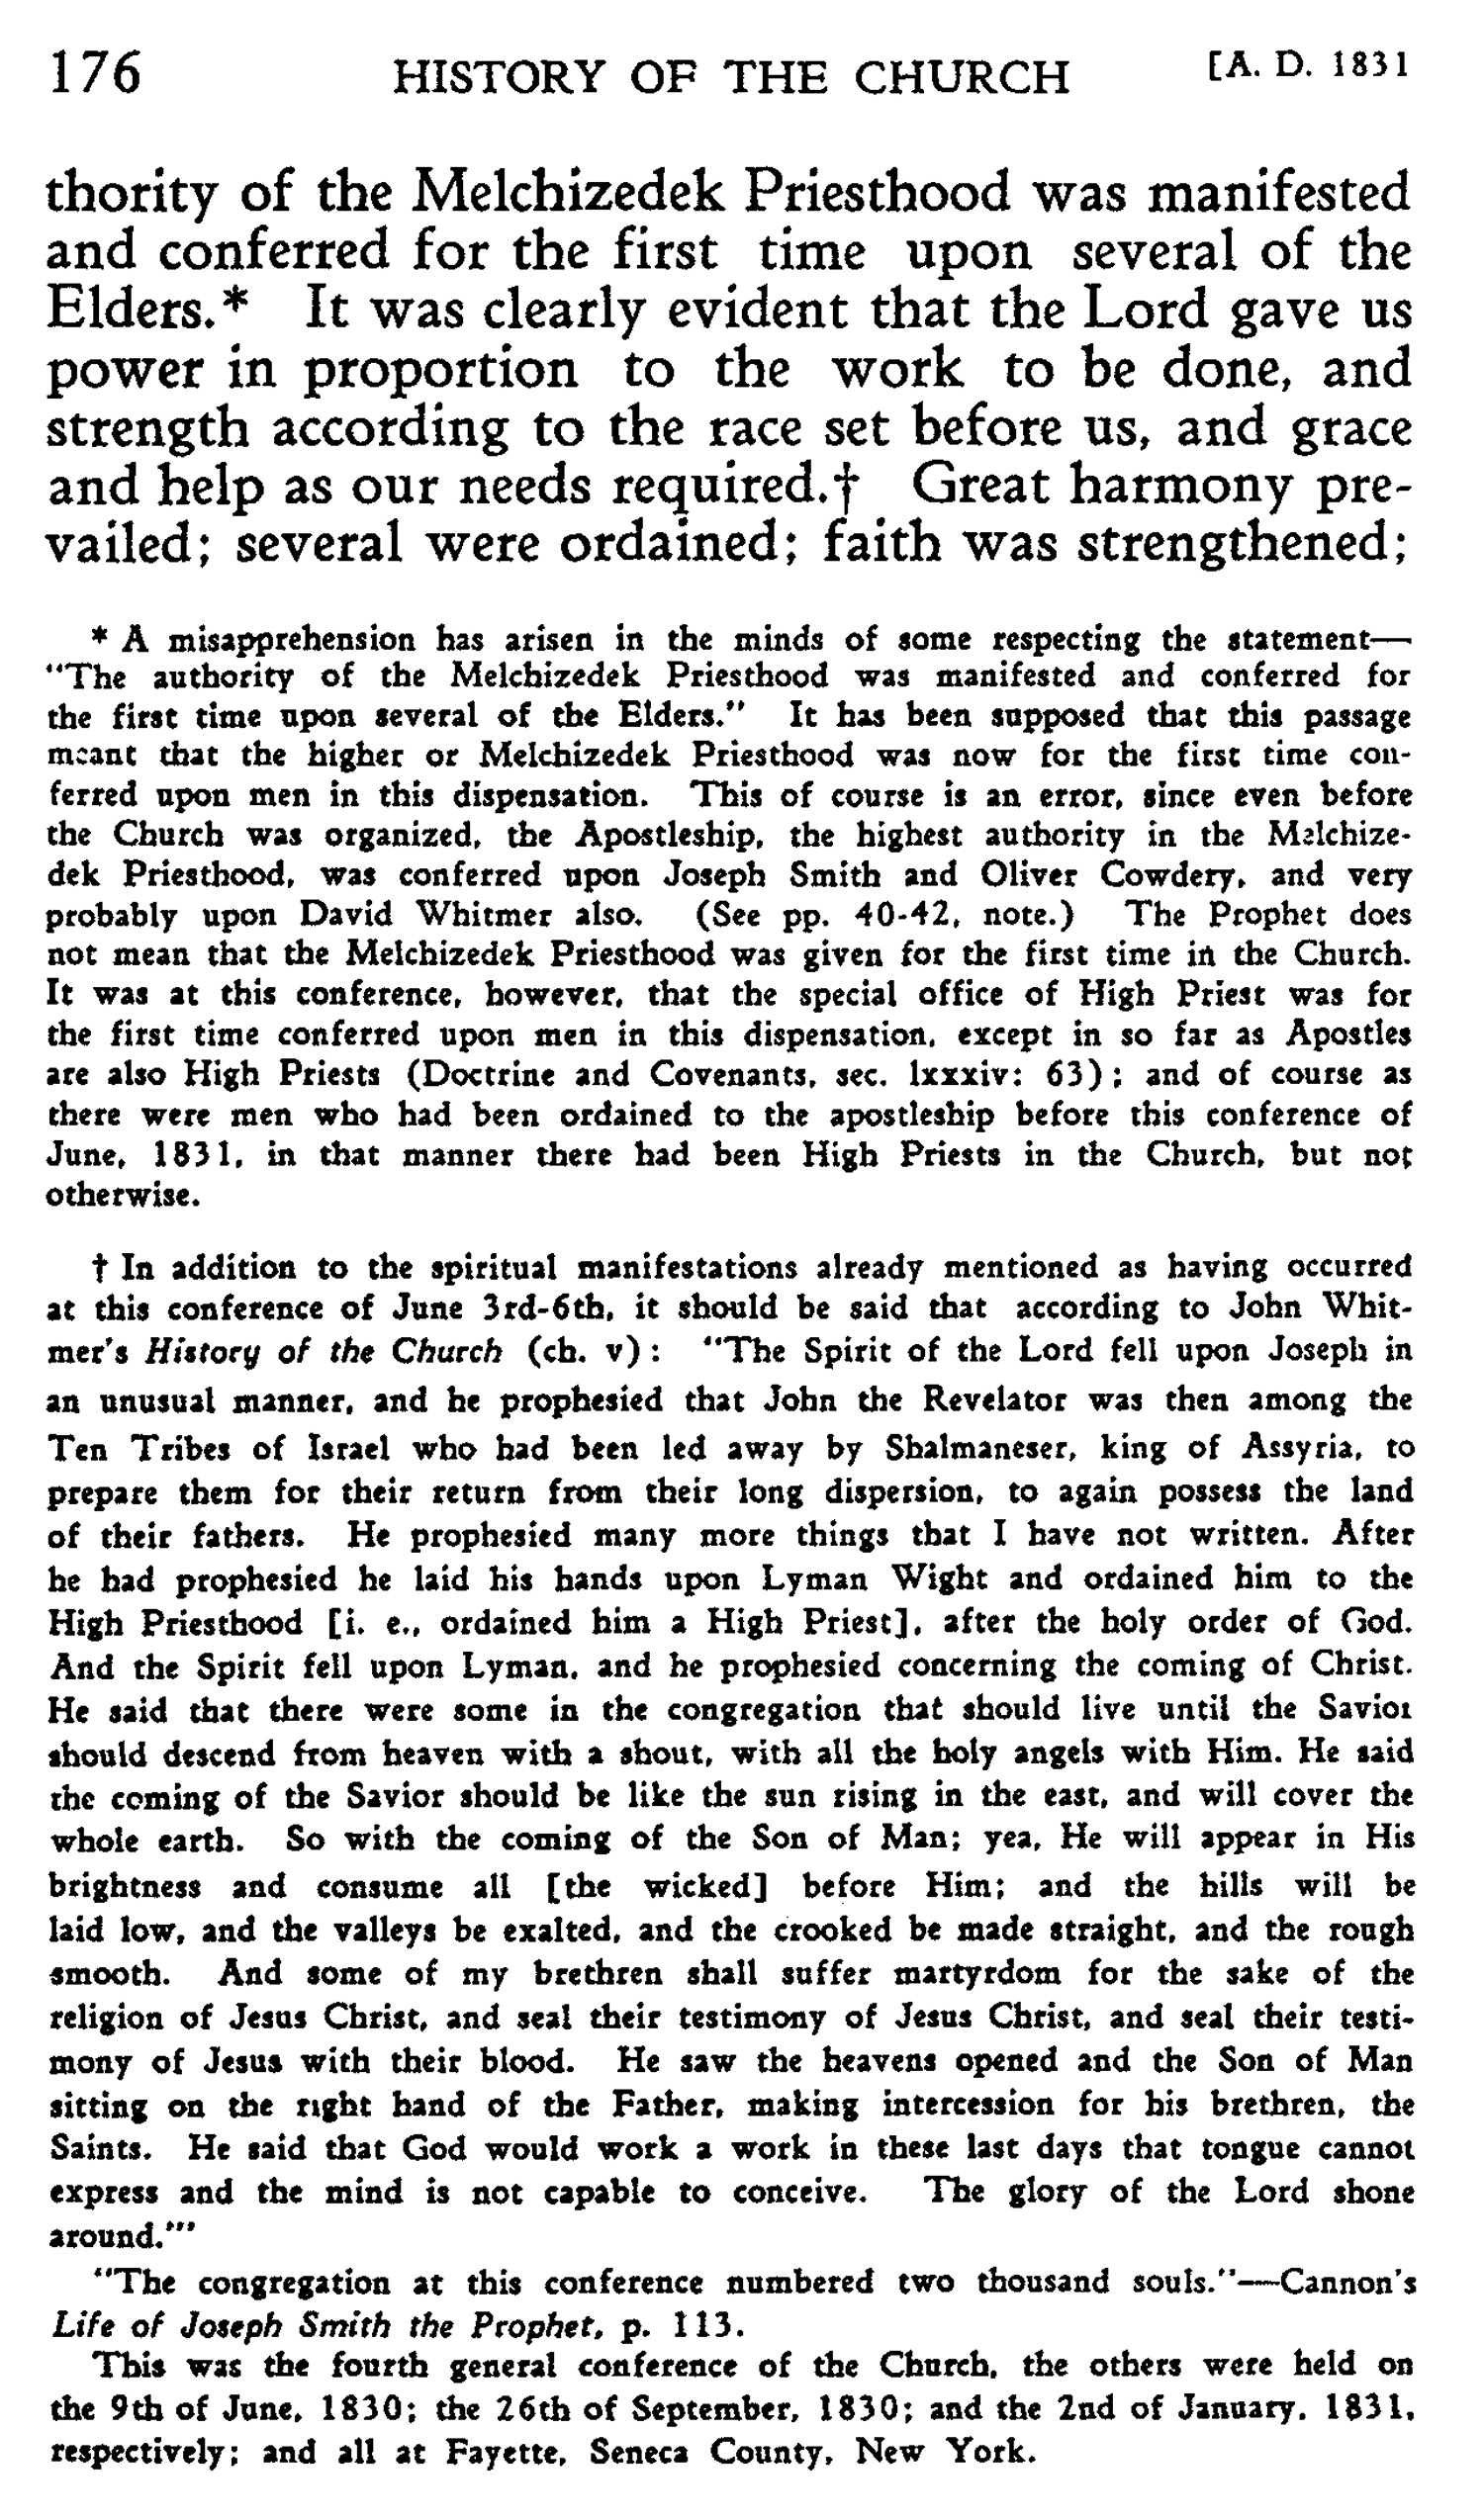 History of the Church, vol. 1, p. 176